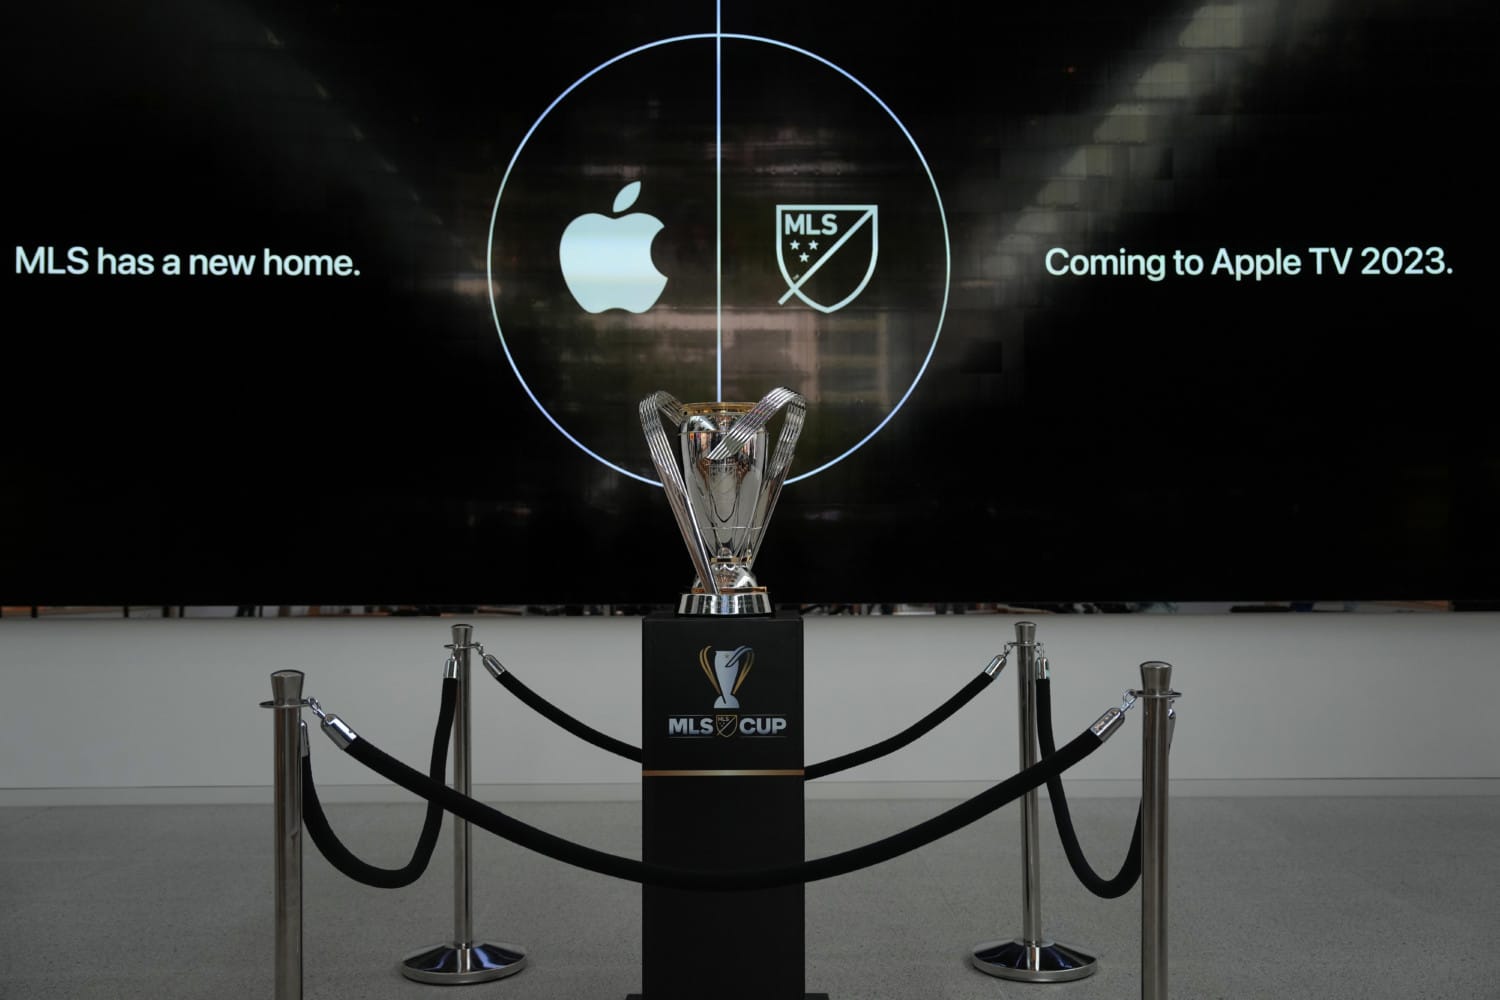 Apple Building Ad Network Ahead of MLS Deal